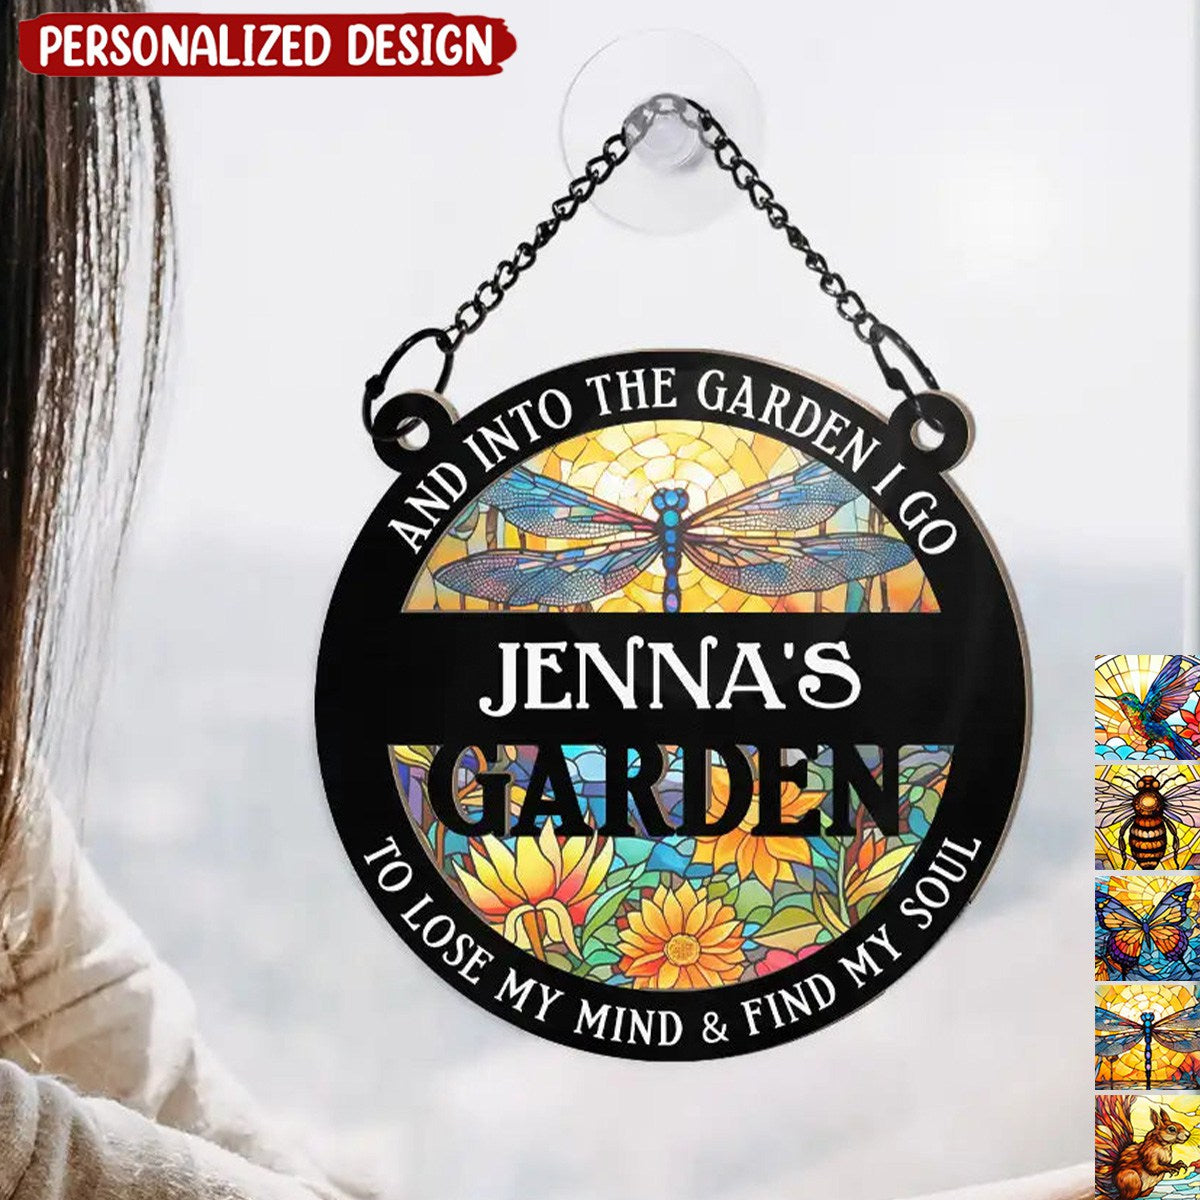 Into The Garden I Go - Personalized Window Hanging Suncatcher Ornament